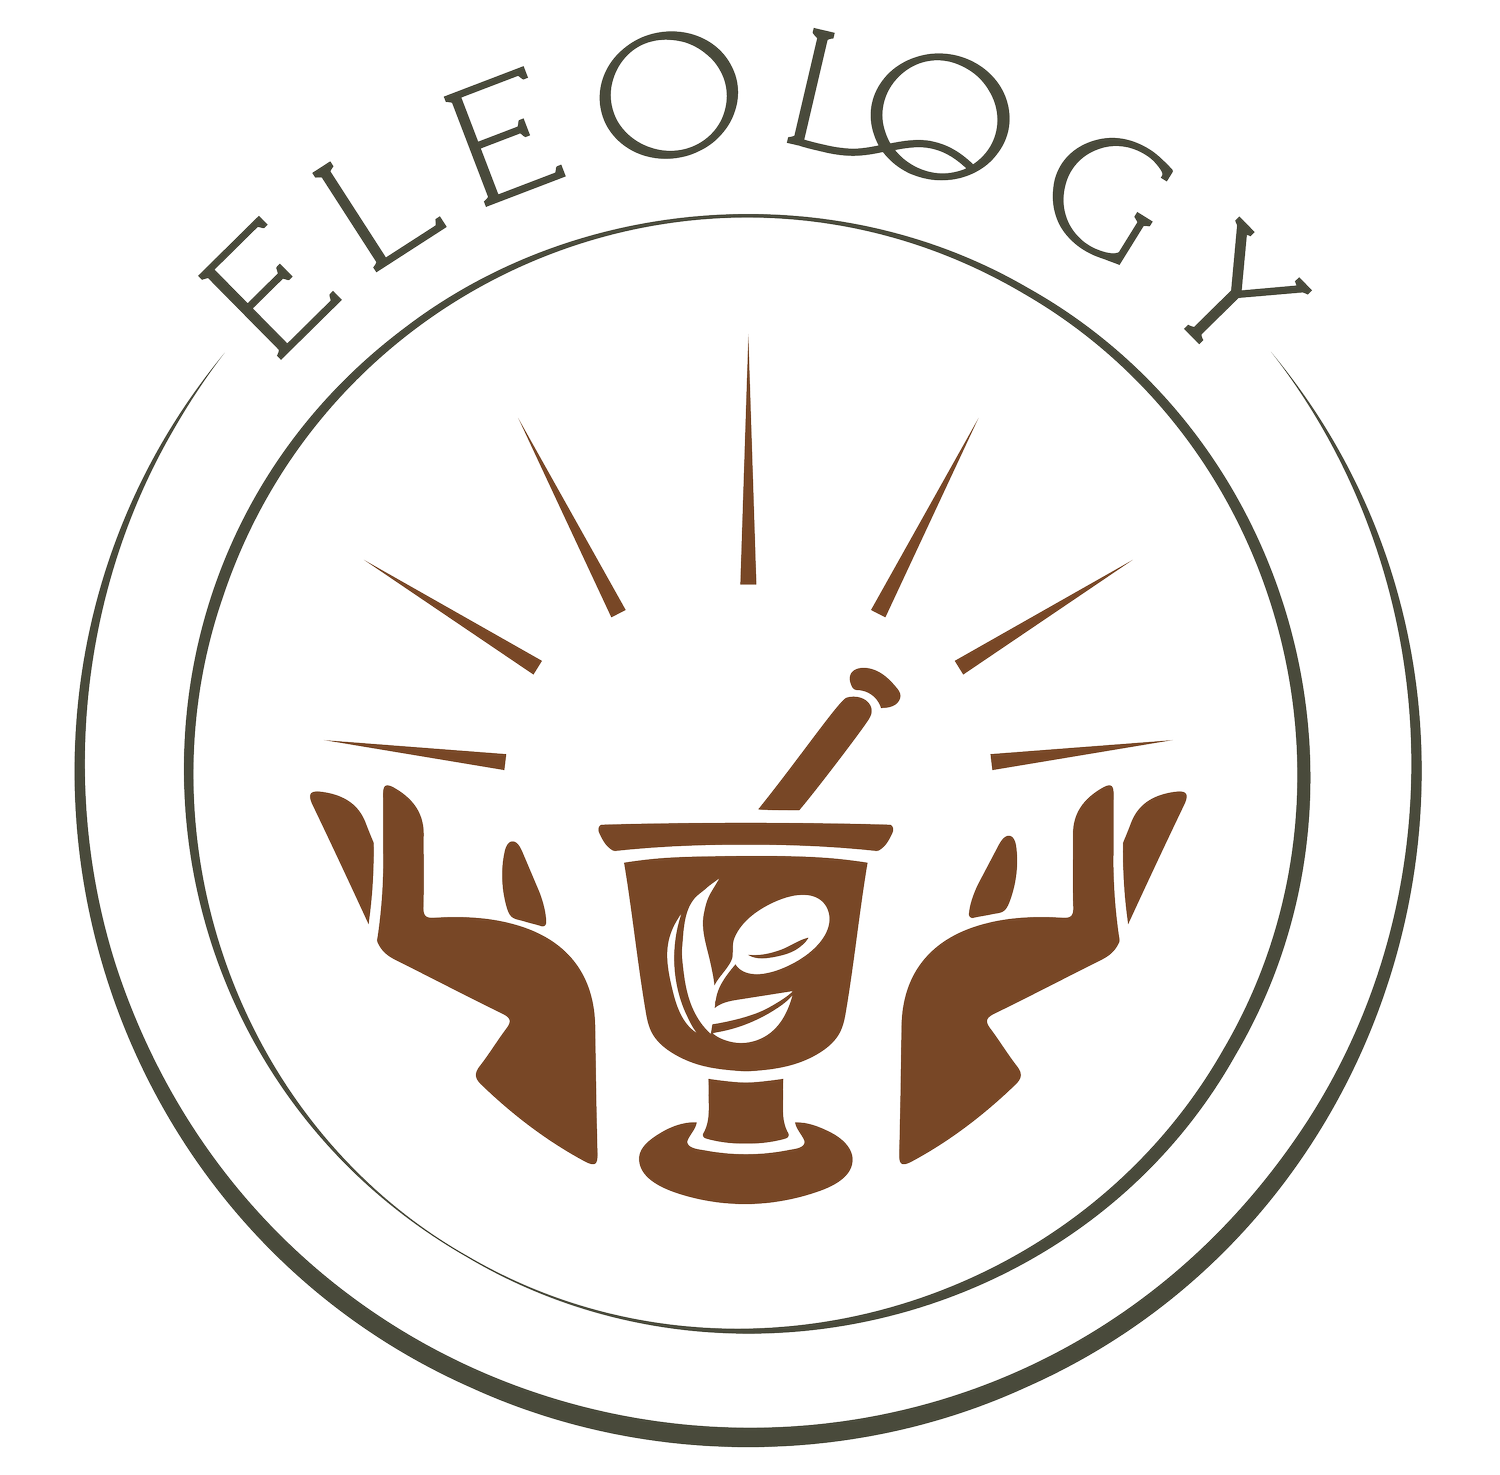 Eleology